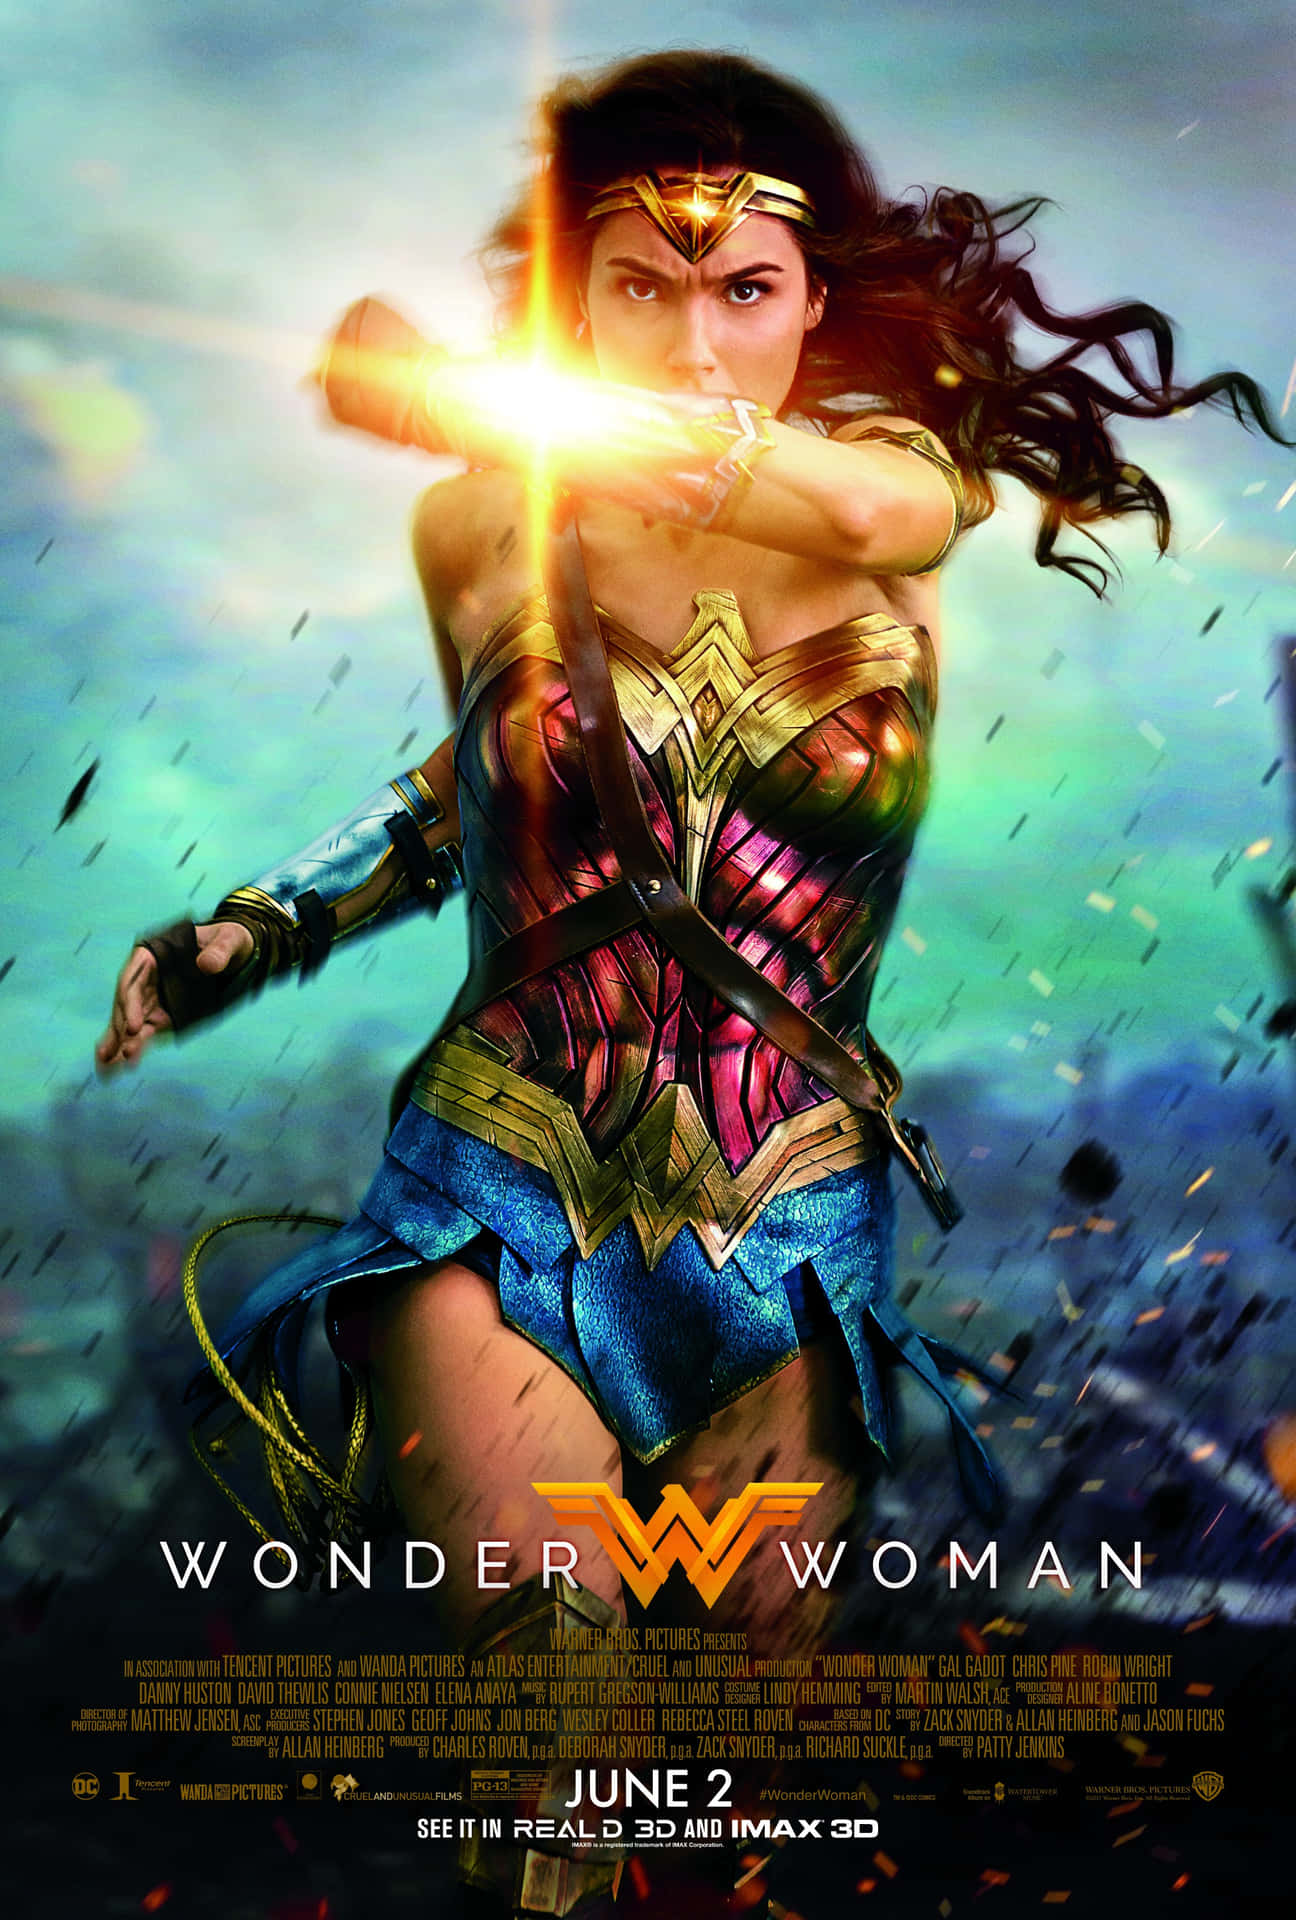 Wonderwoman Ist Teil Eines Superheldenteams.